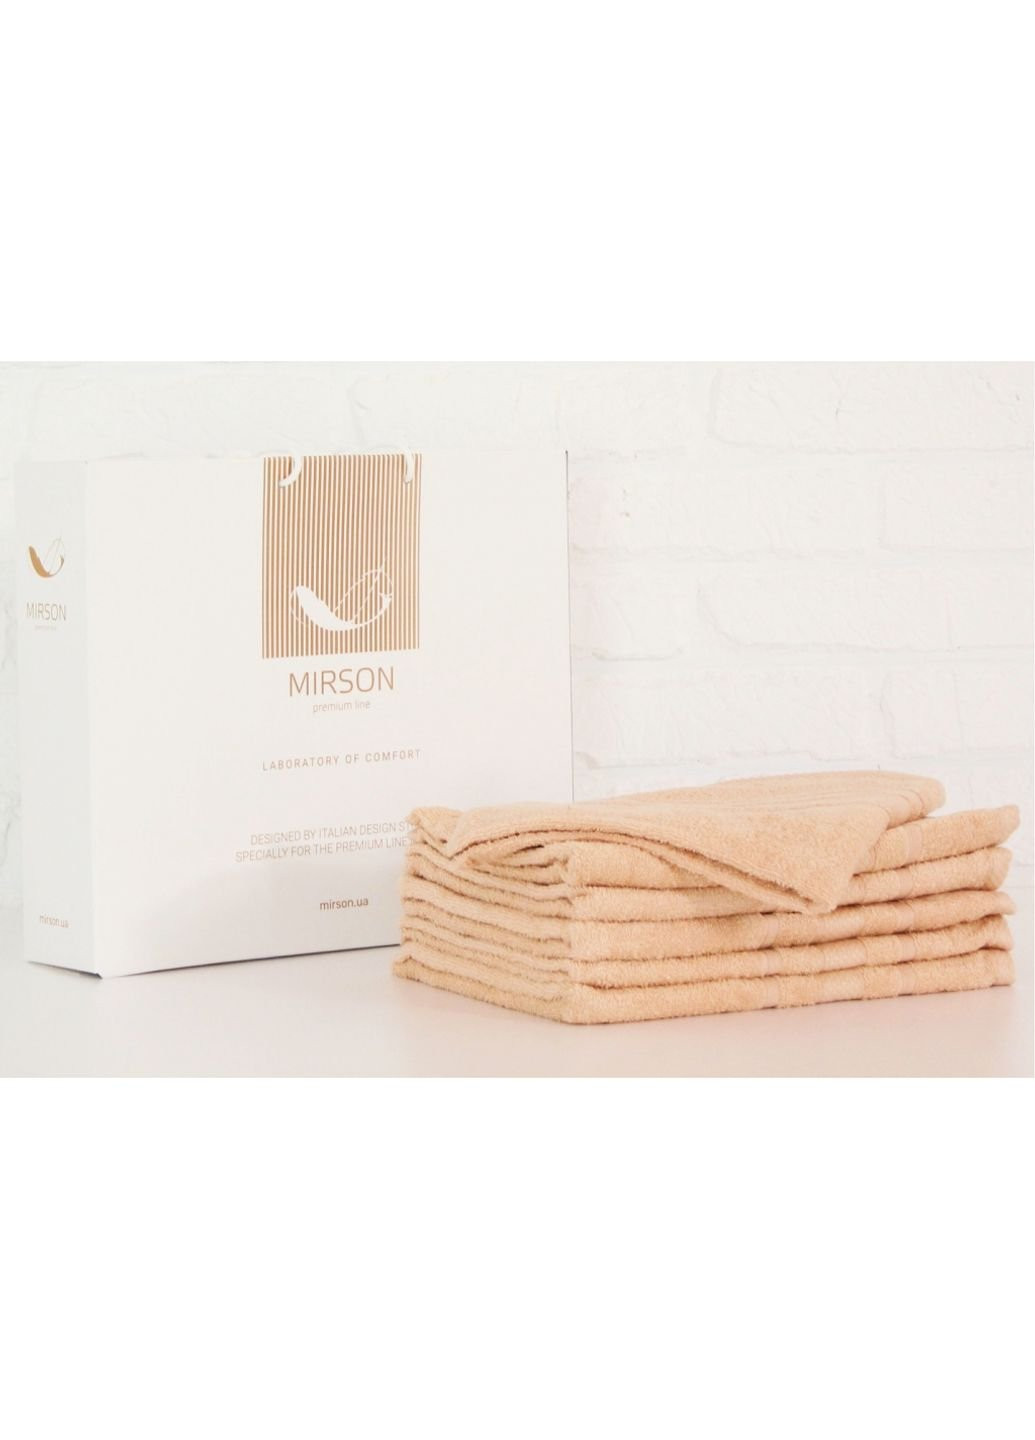 Mirson полотенце набор банных №5075 elite softness ivory 50х90 6 шт (2200003523997) молочный производство - Украина